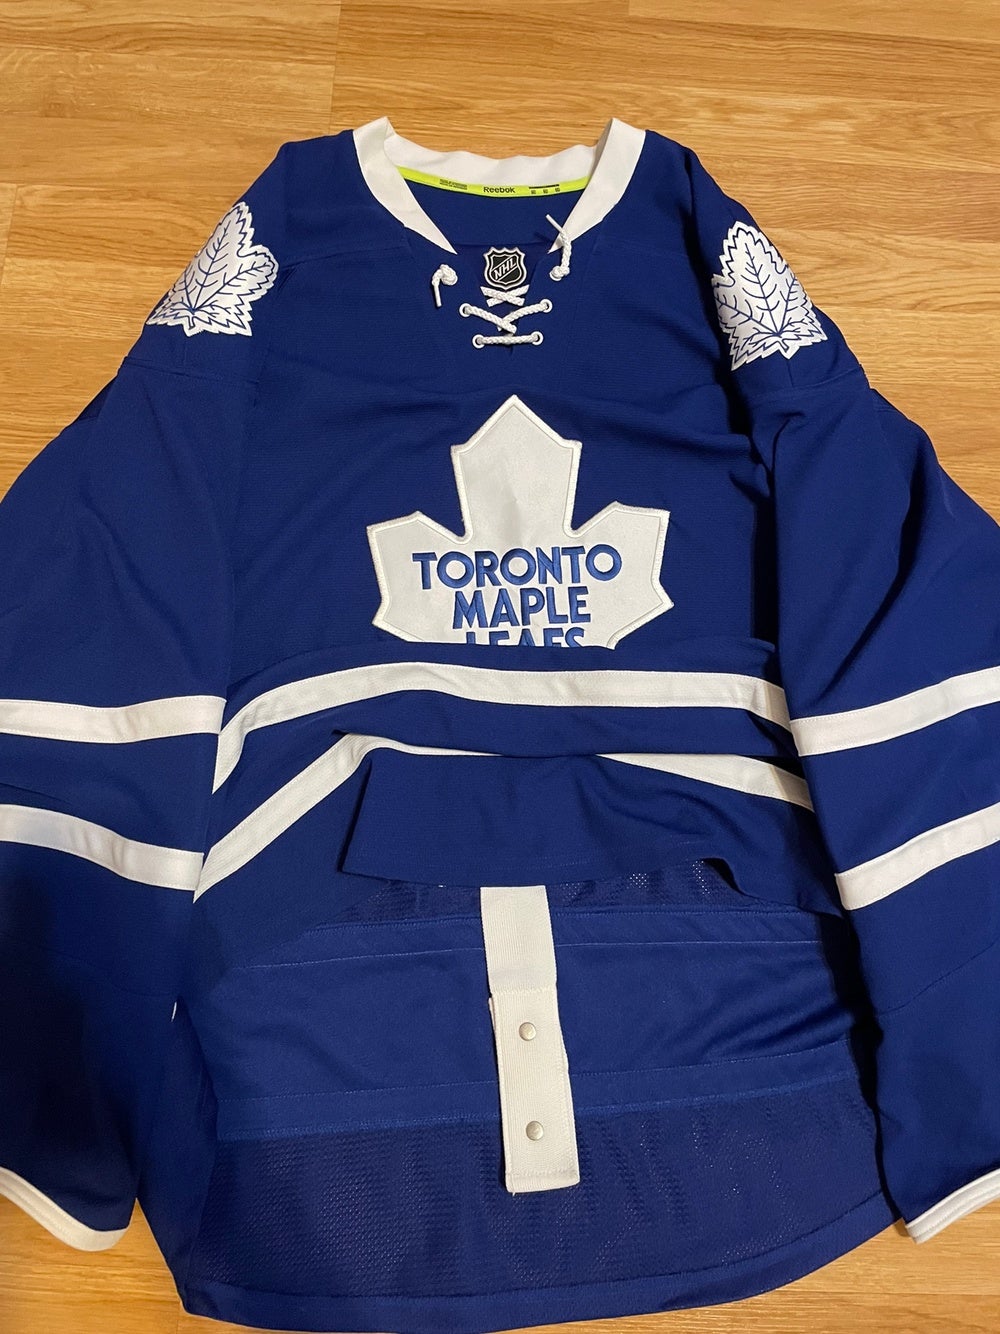 Reebok, Shirts, Toronto Maple Leafs Jersey Blank